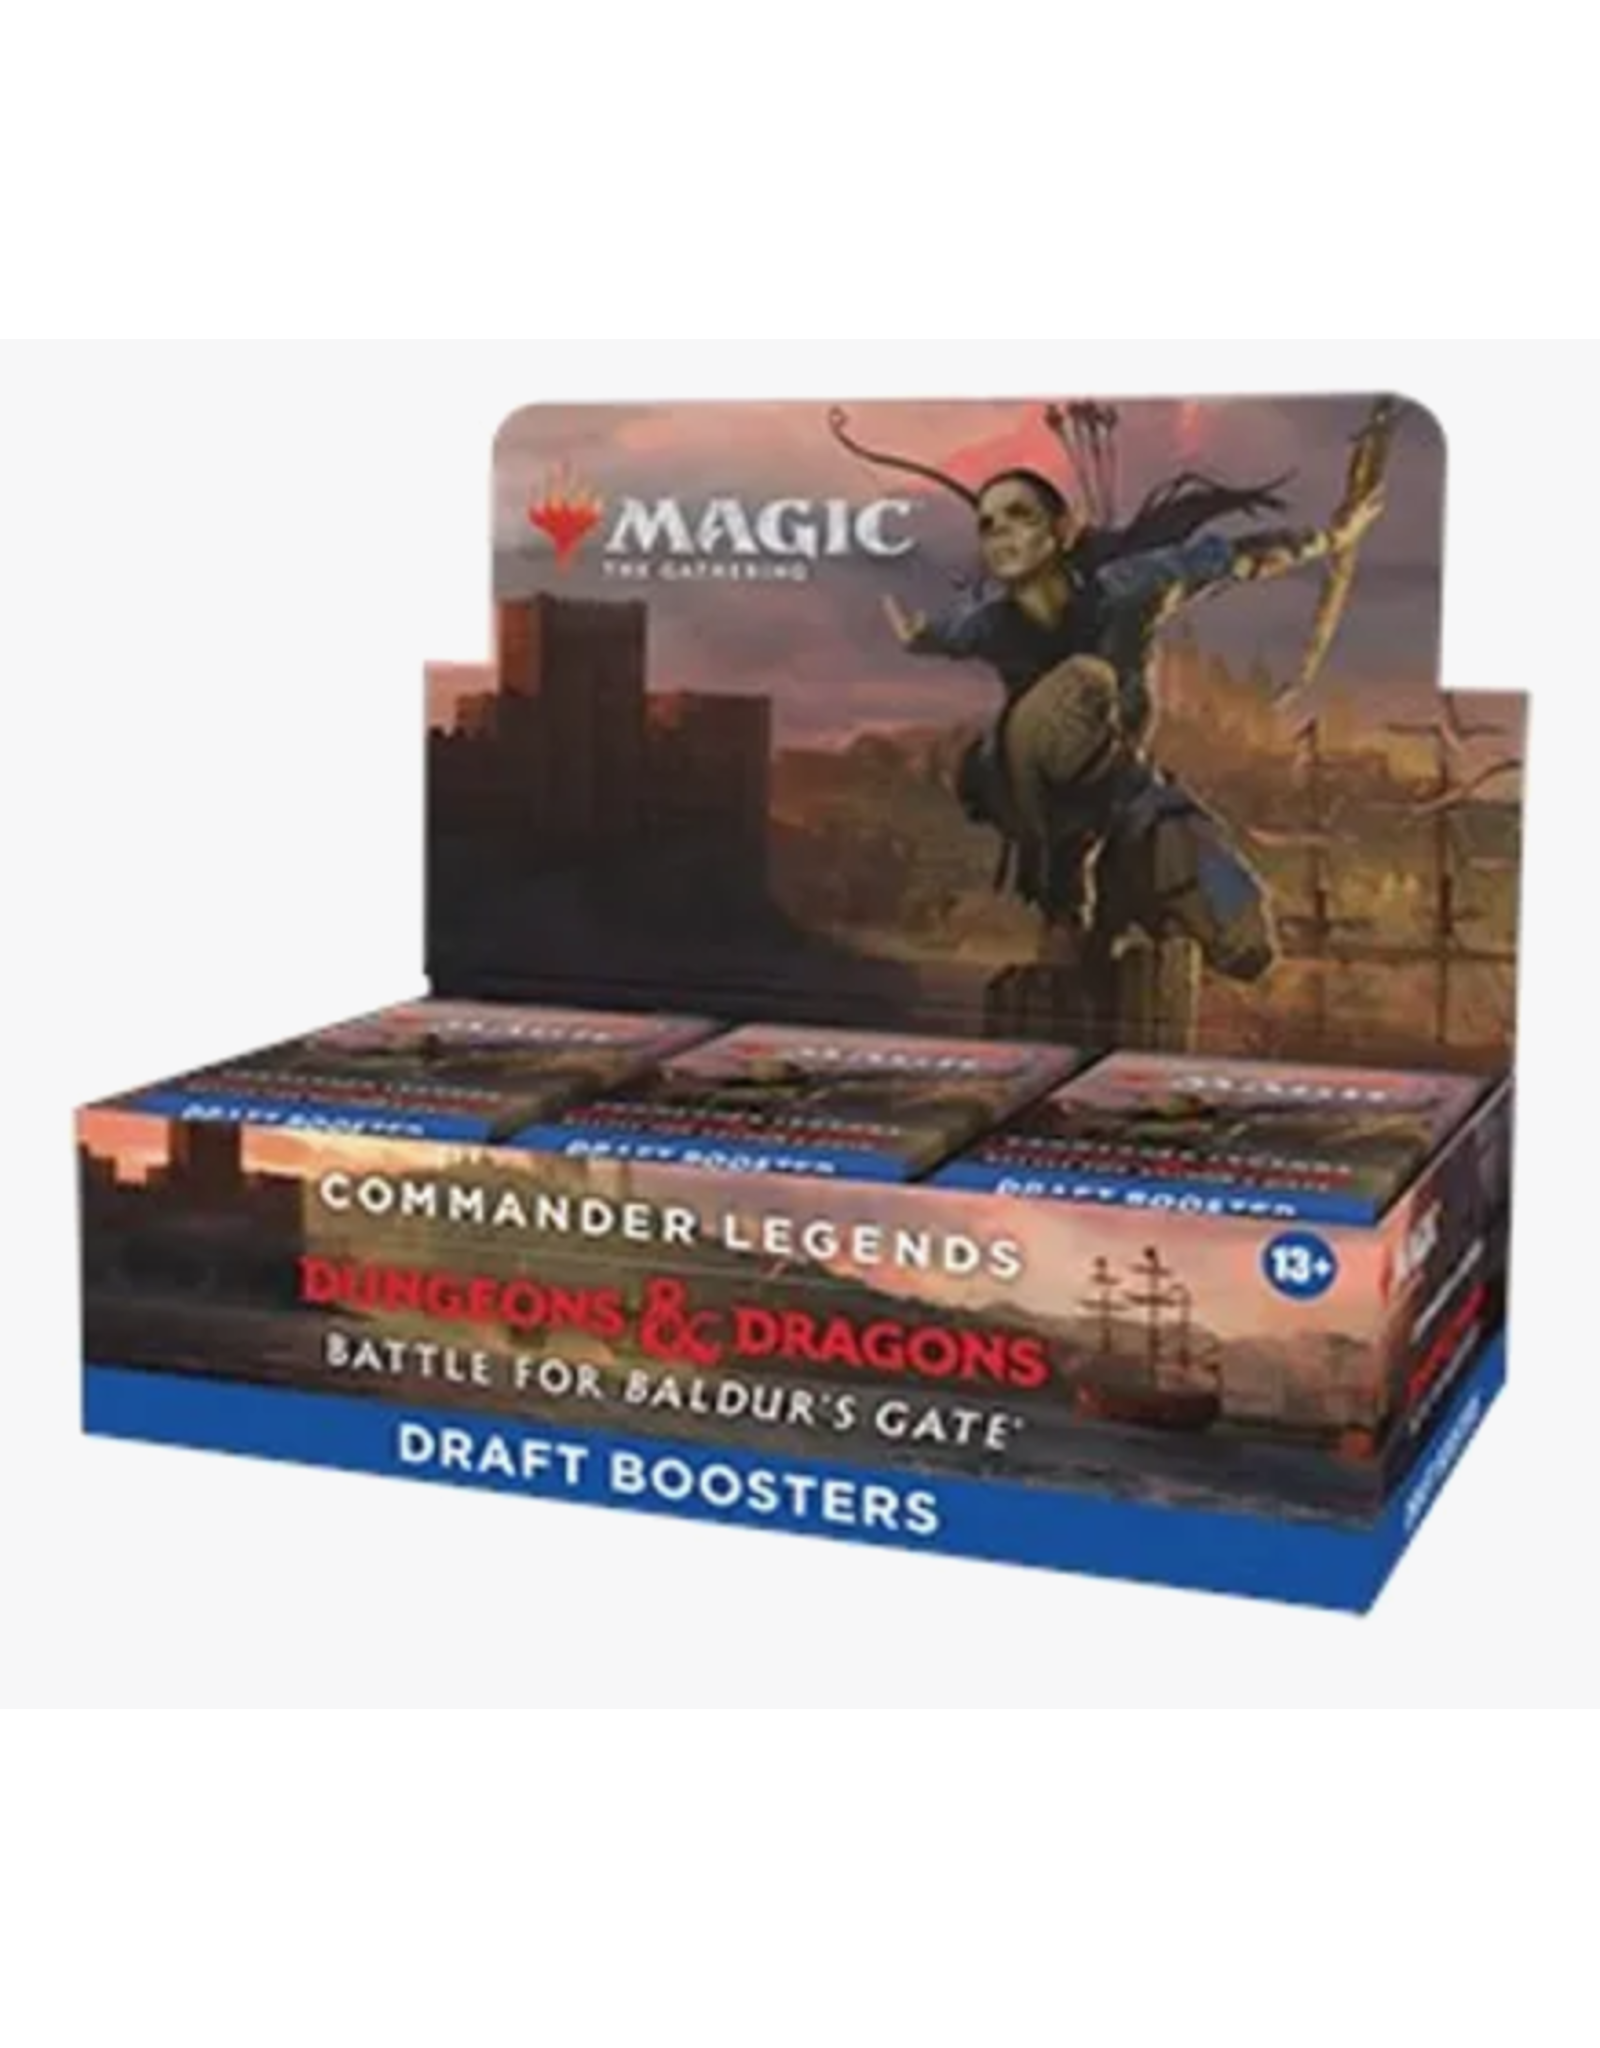 Magic Magic: Commander Legends - Battle for Baldur's Gate Draft Booster Box (24)